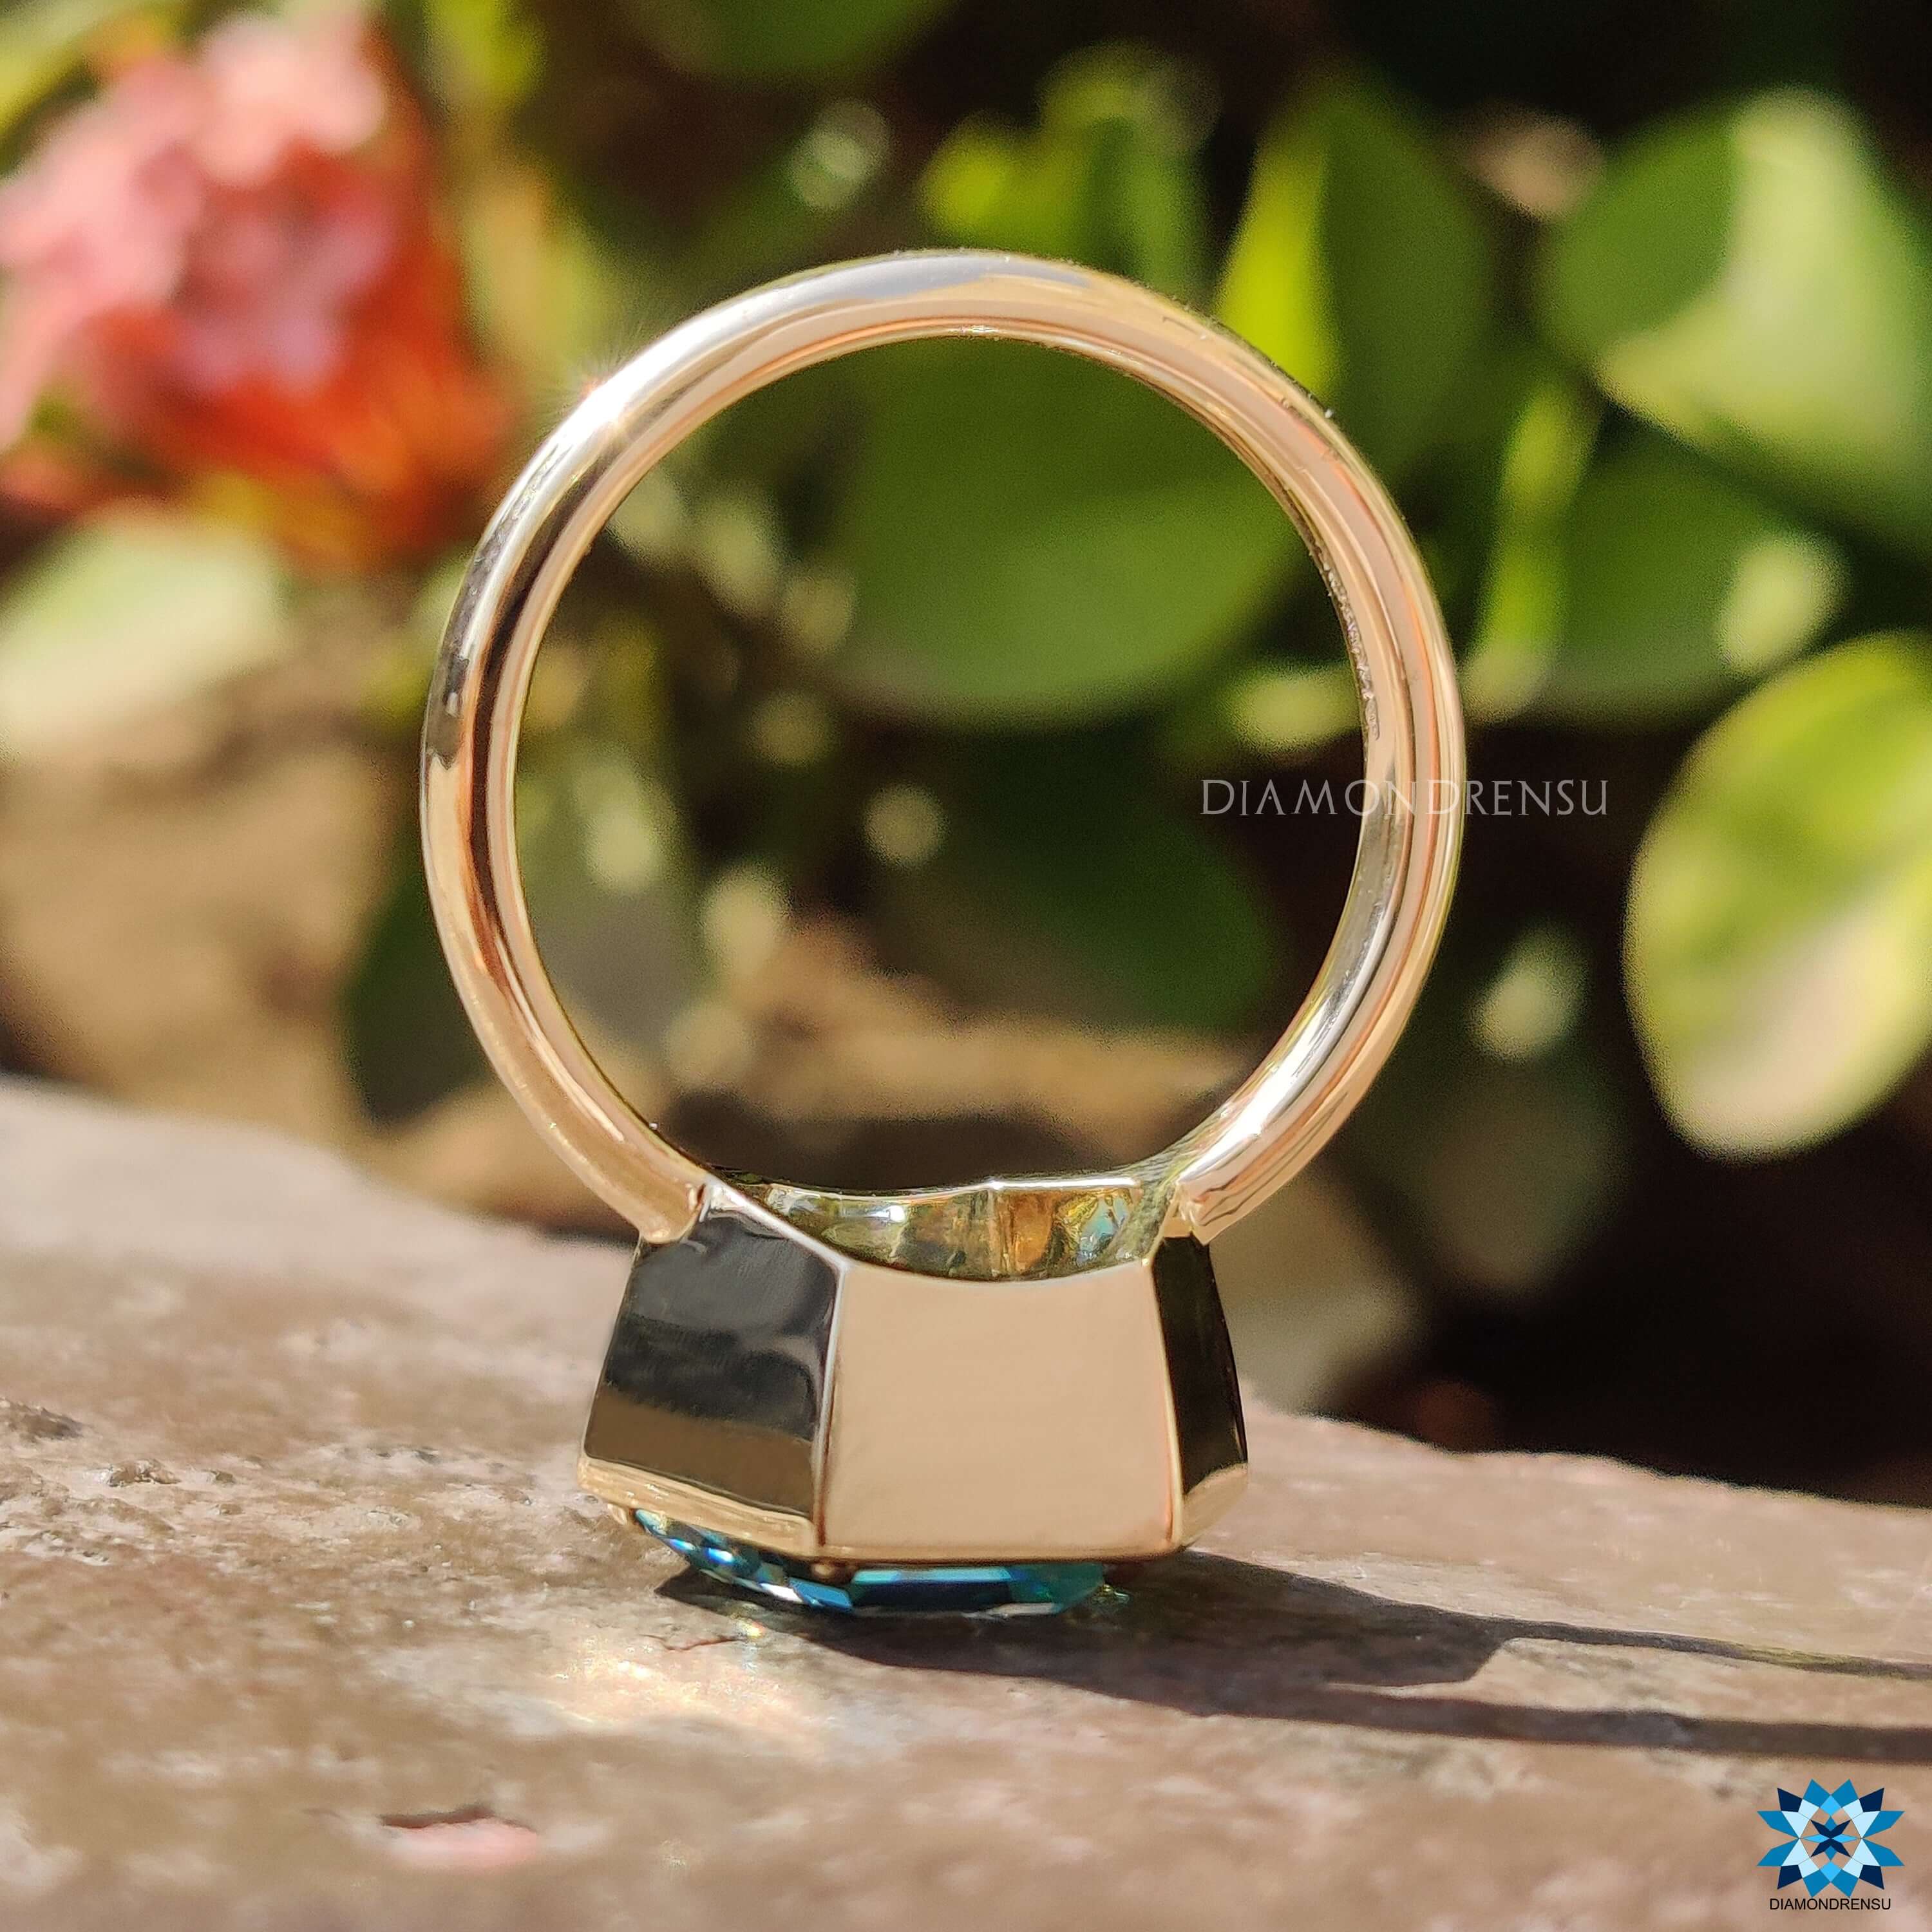 wedding ring set - diamondrensu